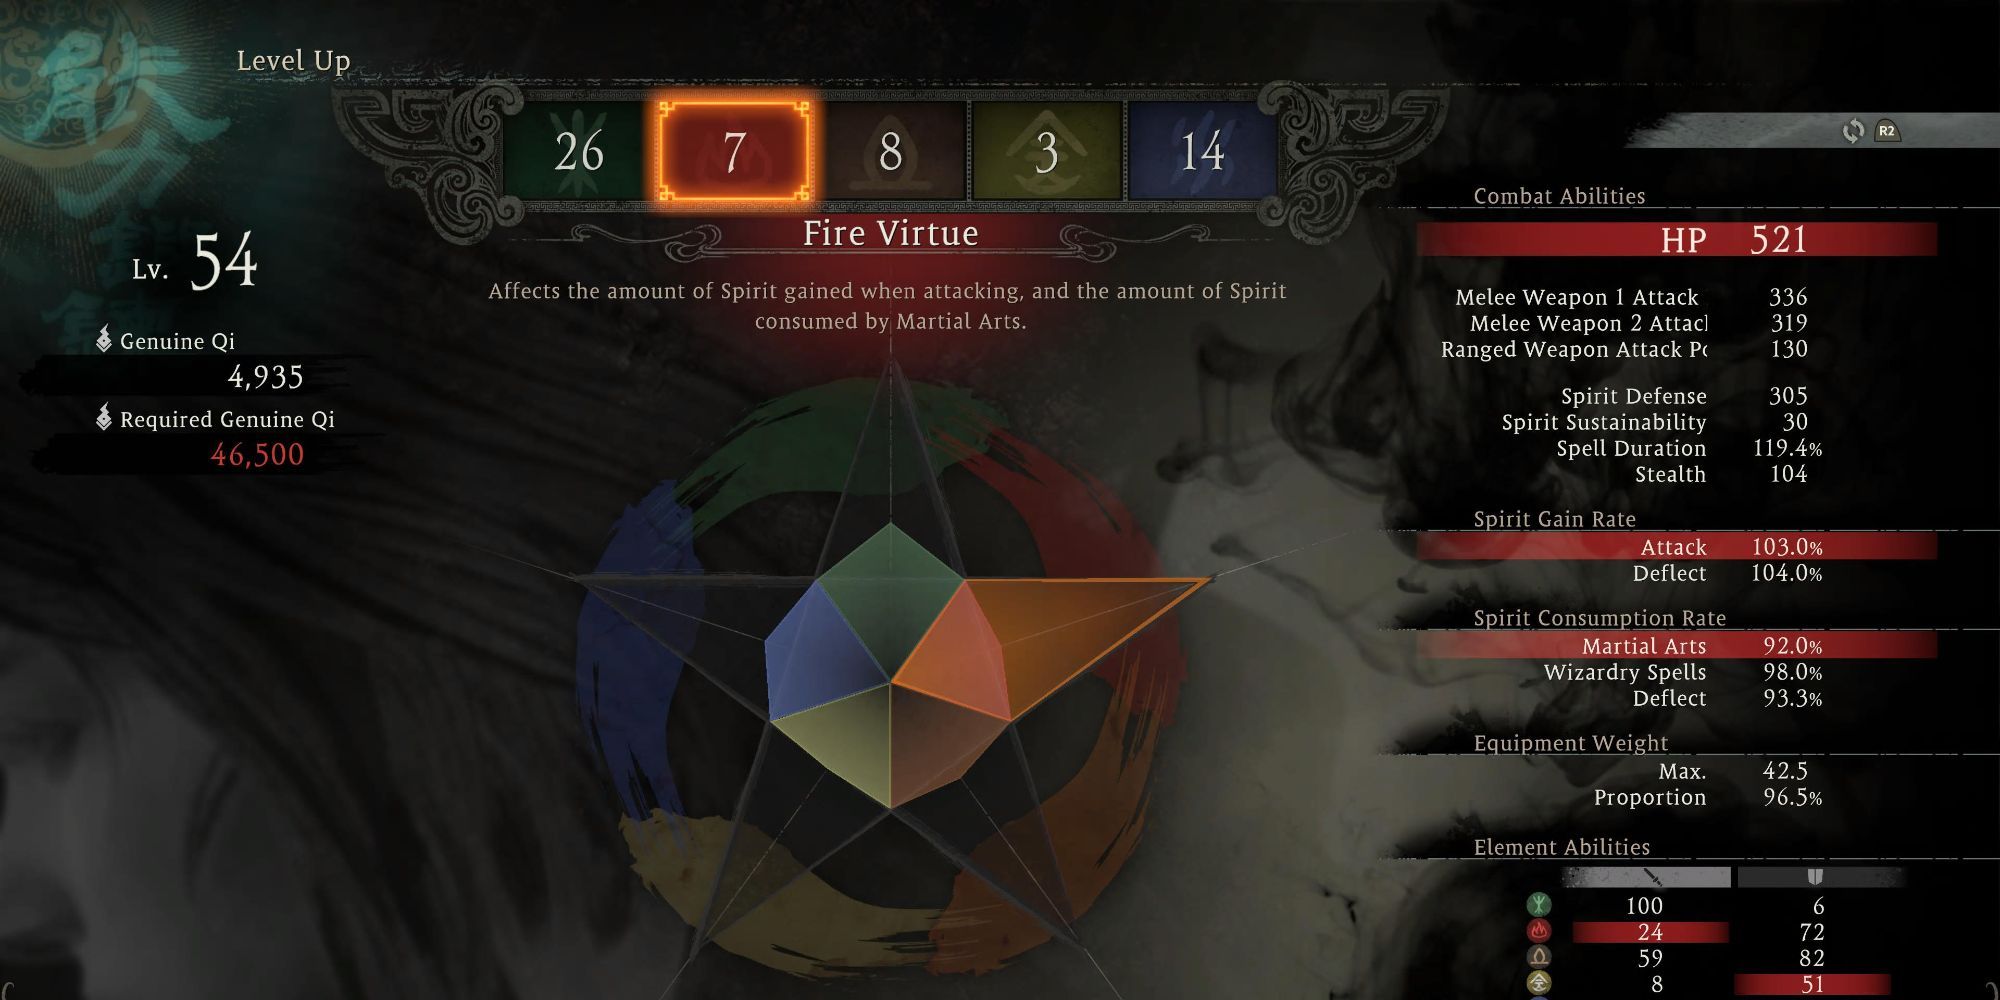 Wo Long: Fallen Dynasty - Fire Virtue level up stats in the menu